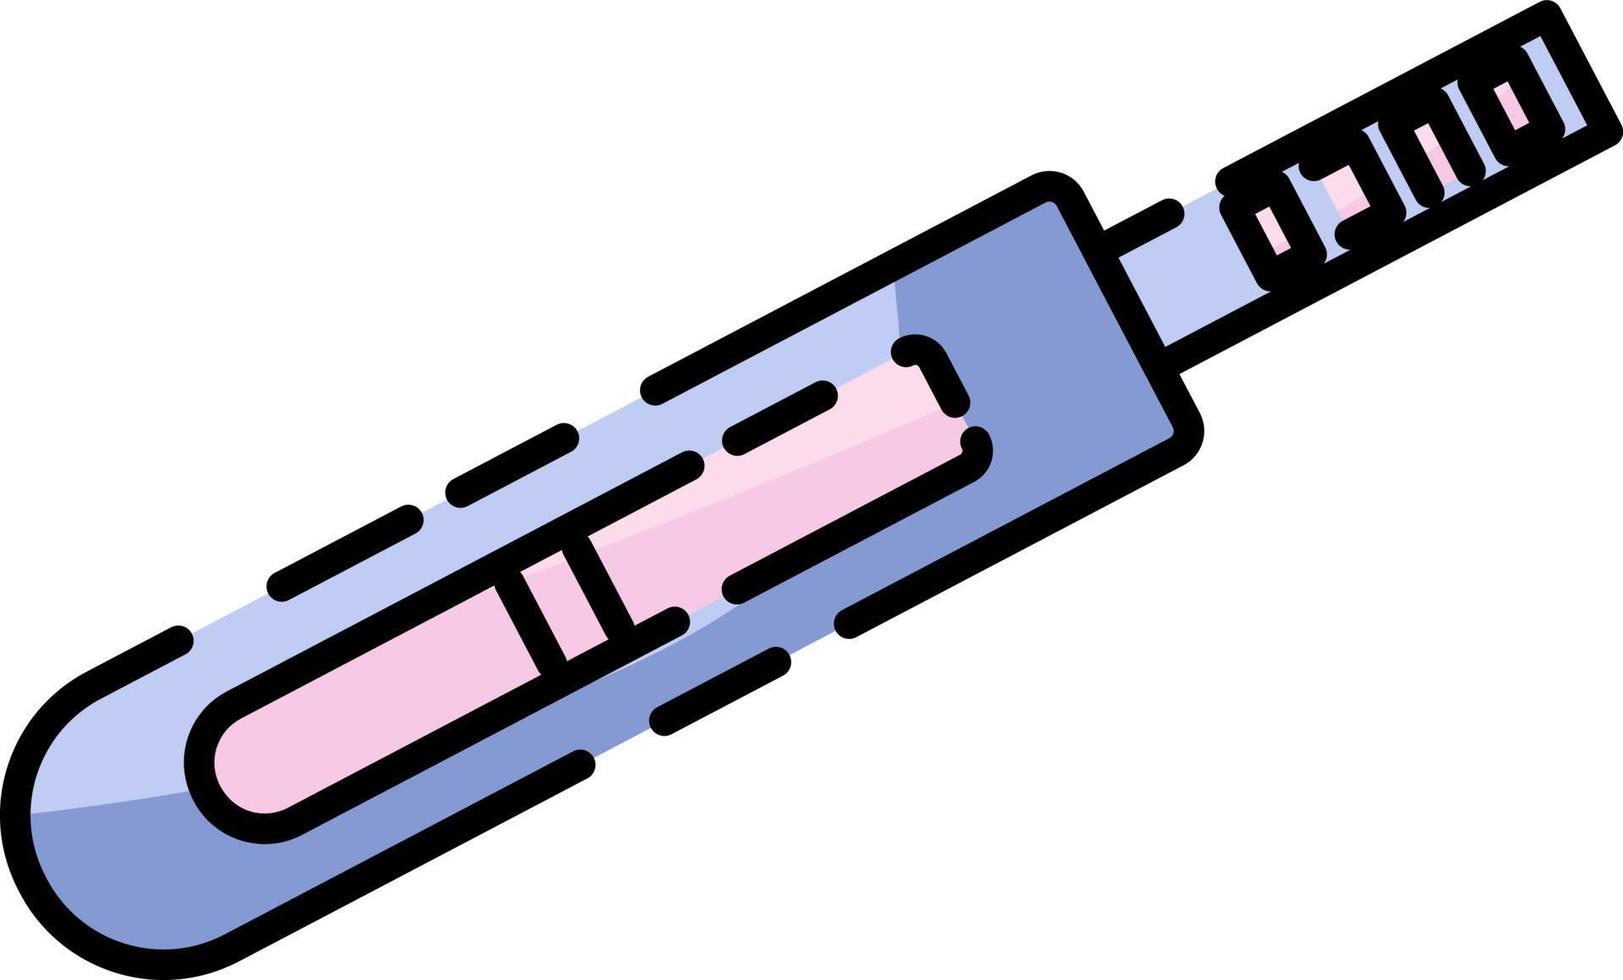 Pregnancy test, illustration, vector on a white background.